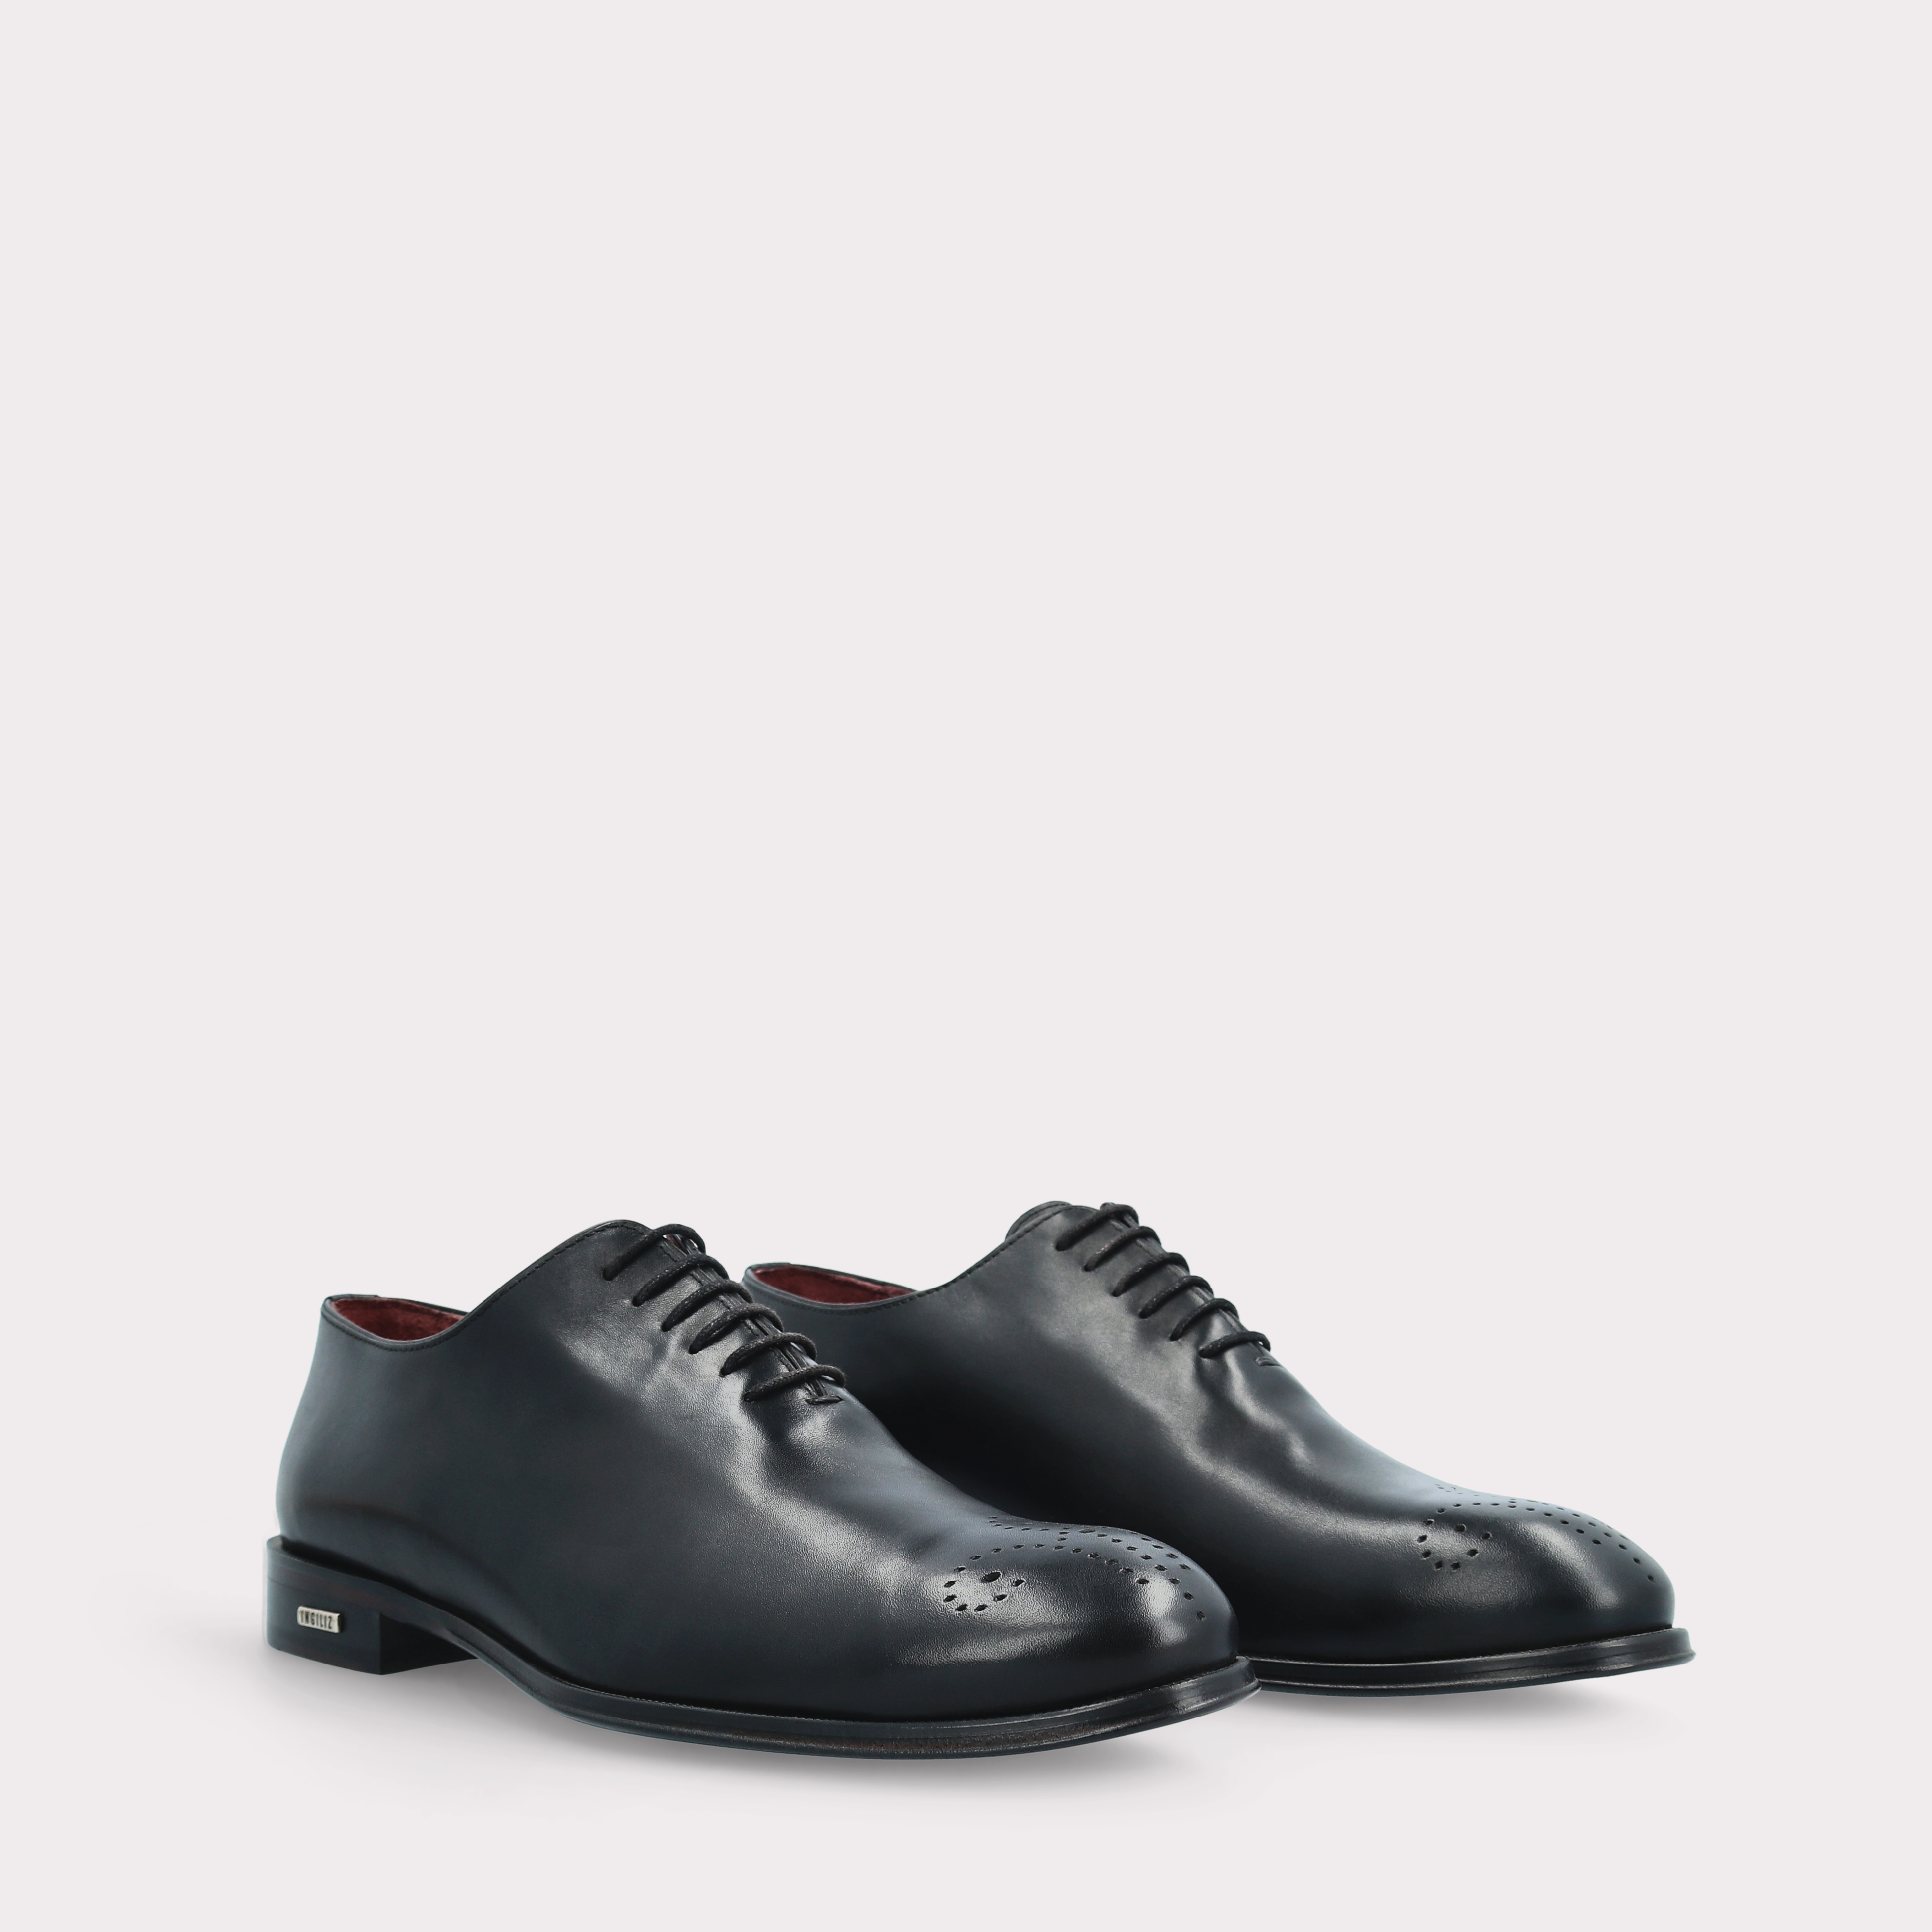 PRATO 01 black leather  oxford shoes